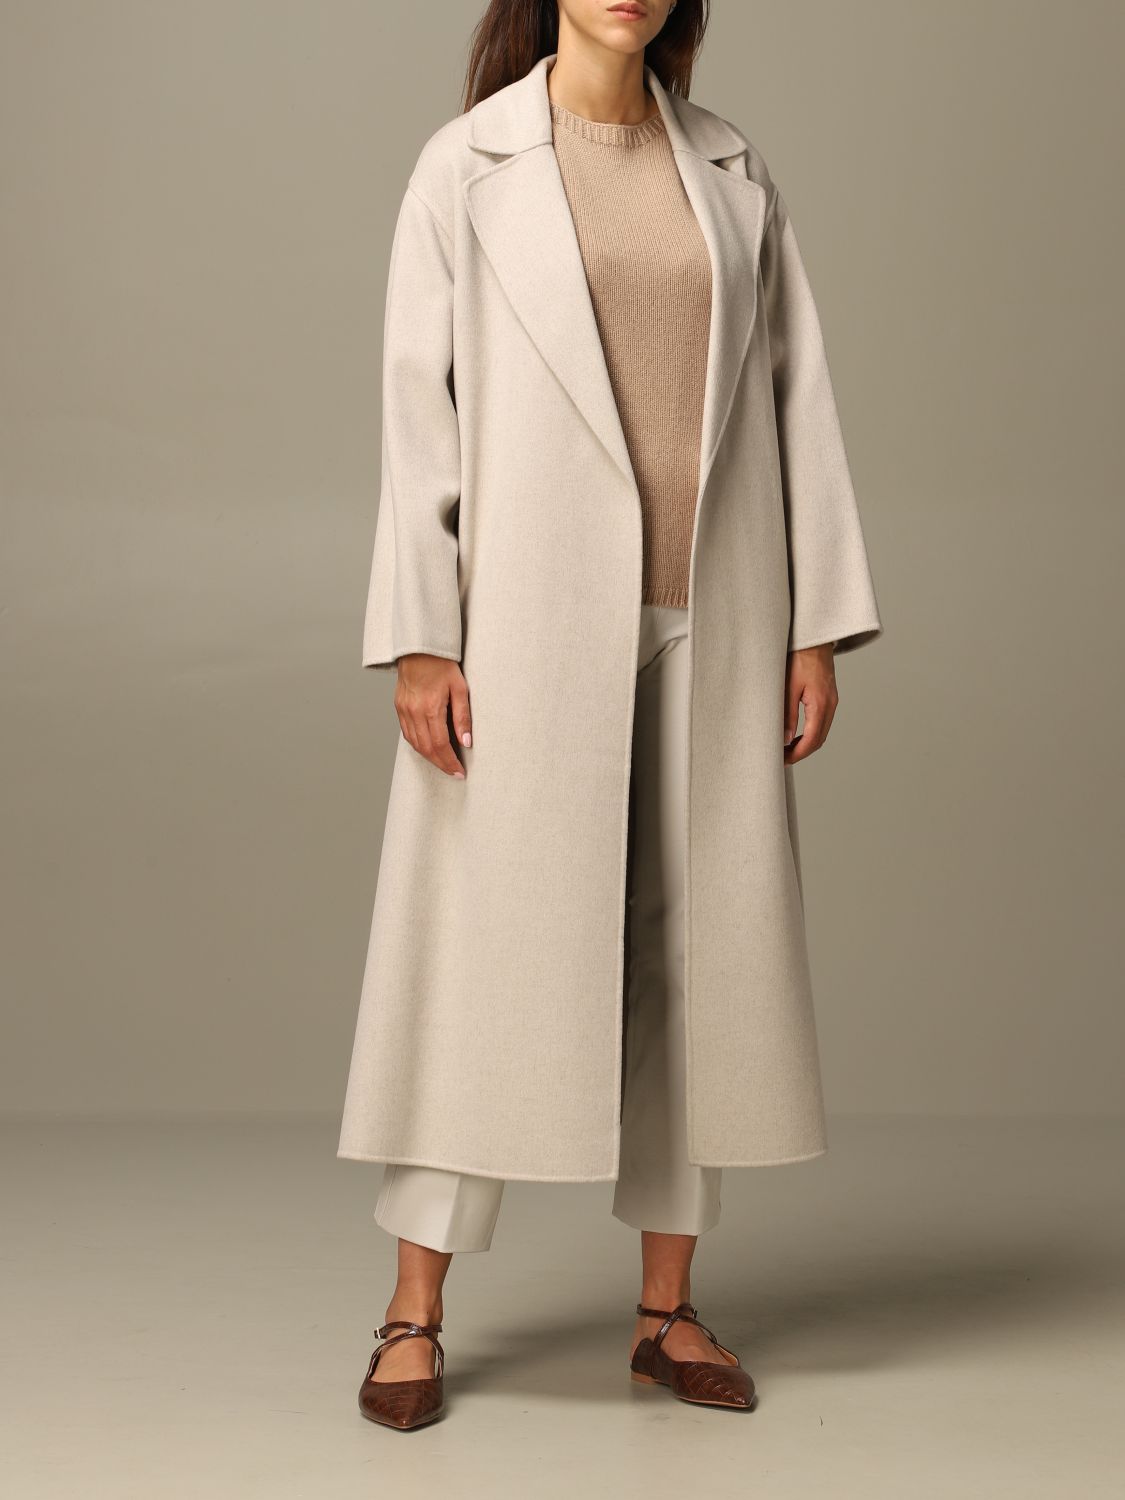 S MAX MARA: Elena coat in virgin wool - Mastic | Coat S Max Mara ...